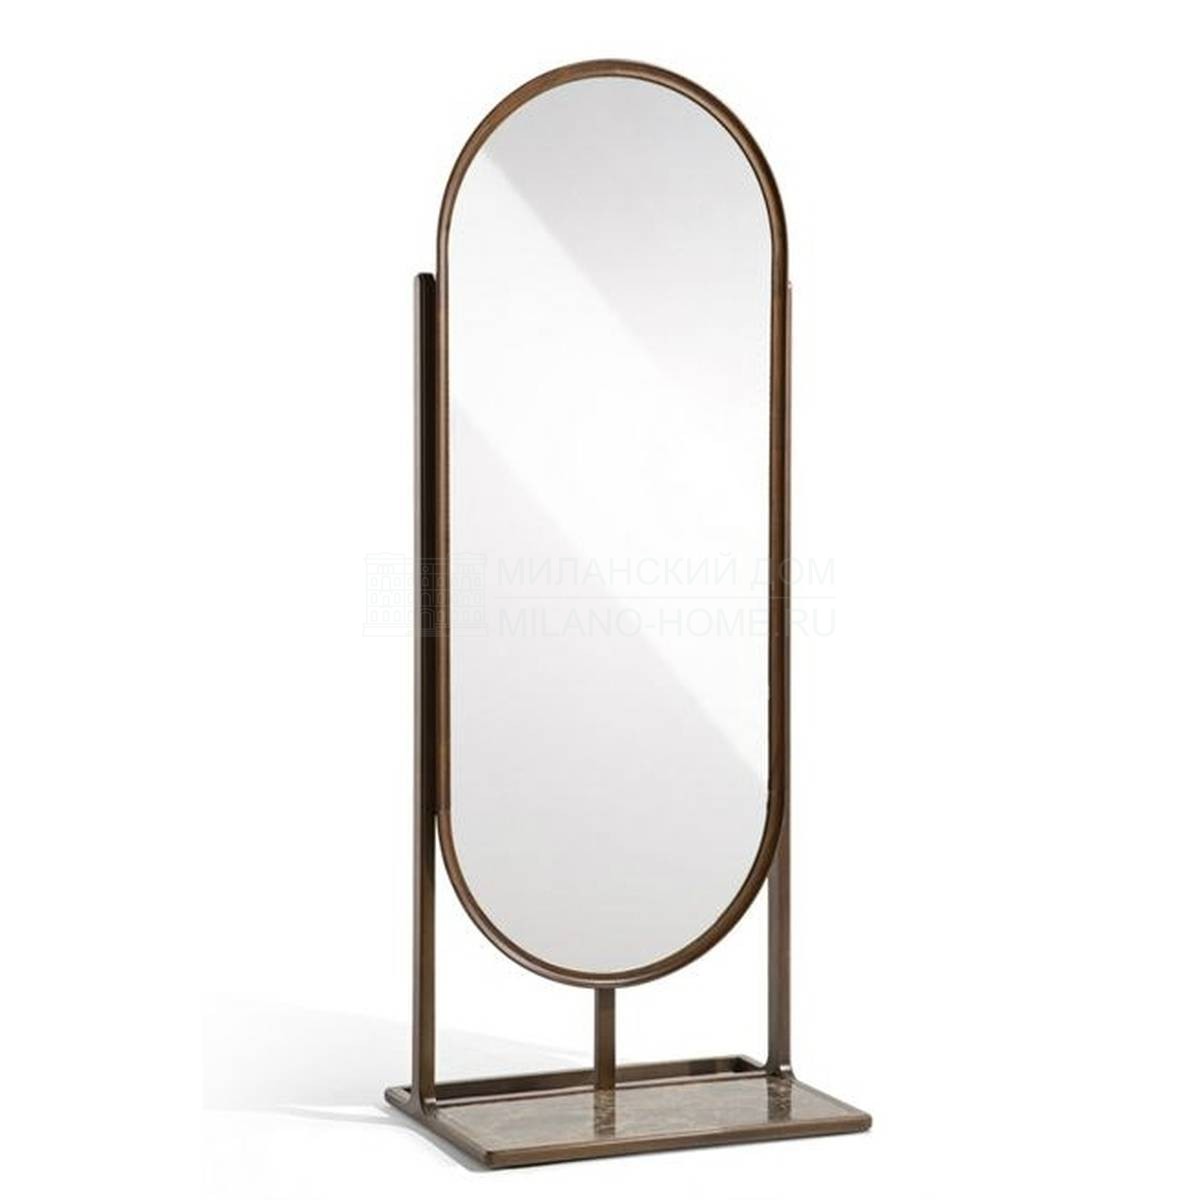 Зеркало напольное Repertoire mirror  из Франции фабрики ROCHE BOBOIS